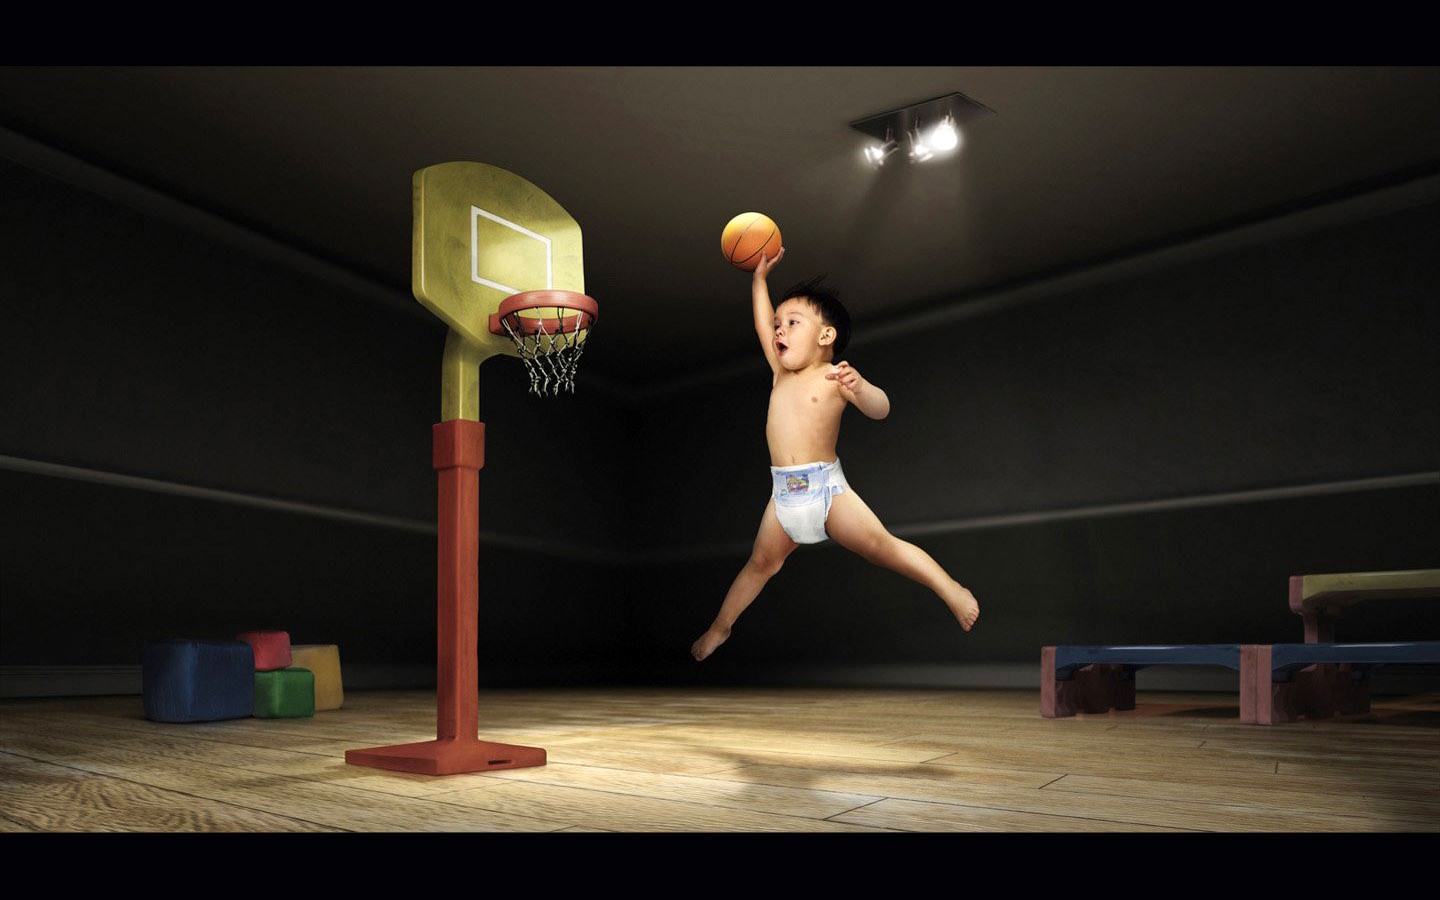 Download Wallpaper the ball child basketball humor fun boy, 1440x Young basketball player